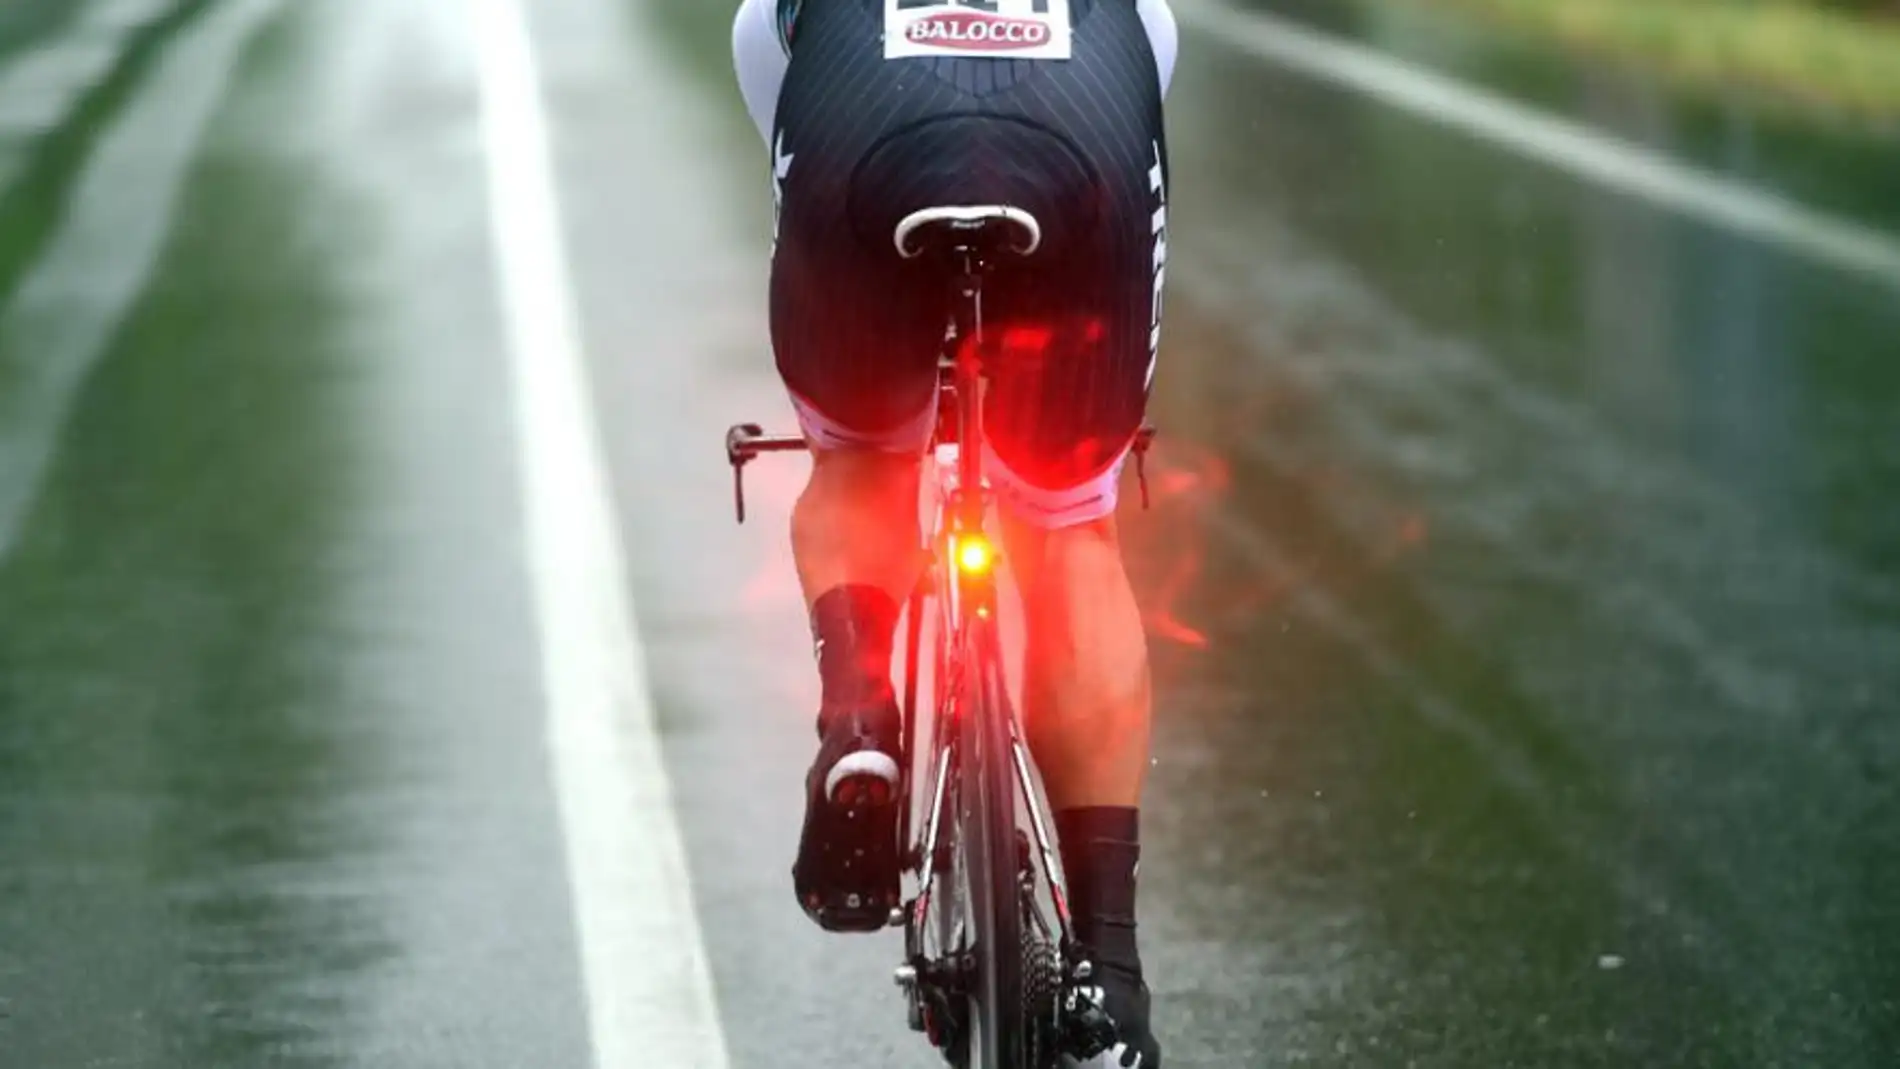 Usar luces parpadeantes en tu bici es motivo de multa: la última polémica de la DGT title=